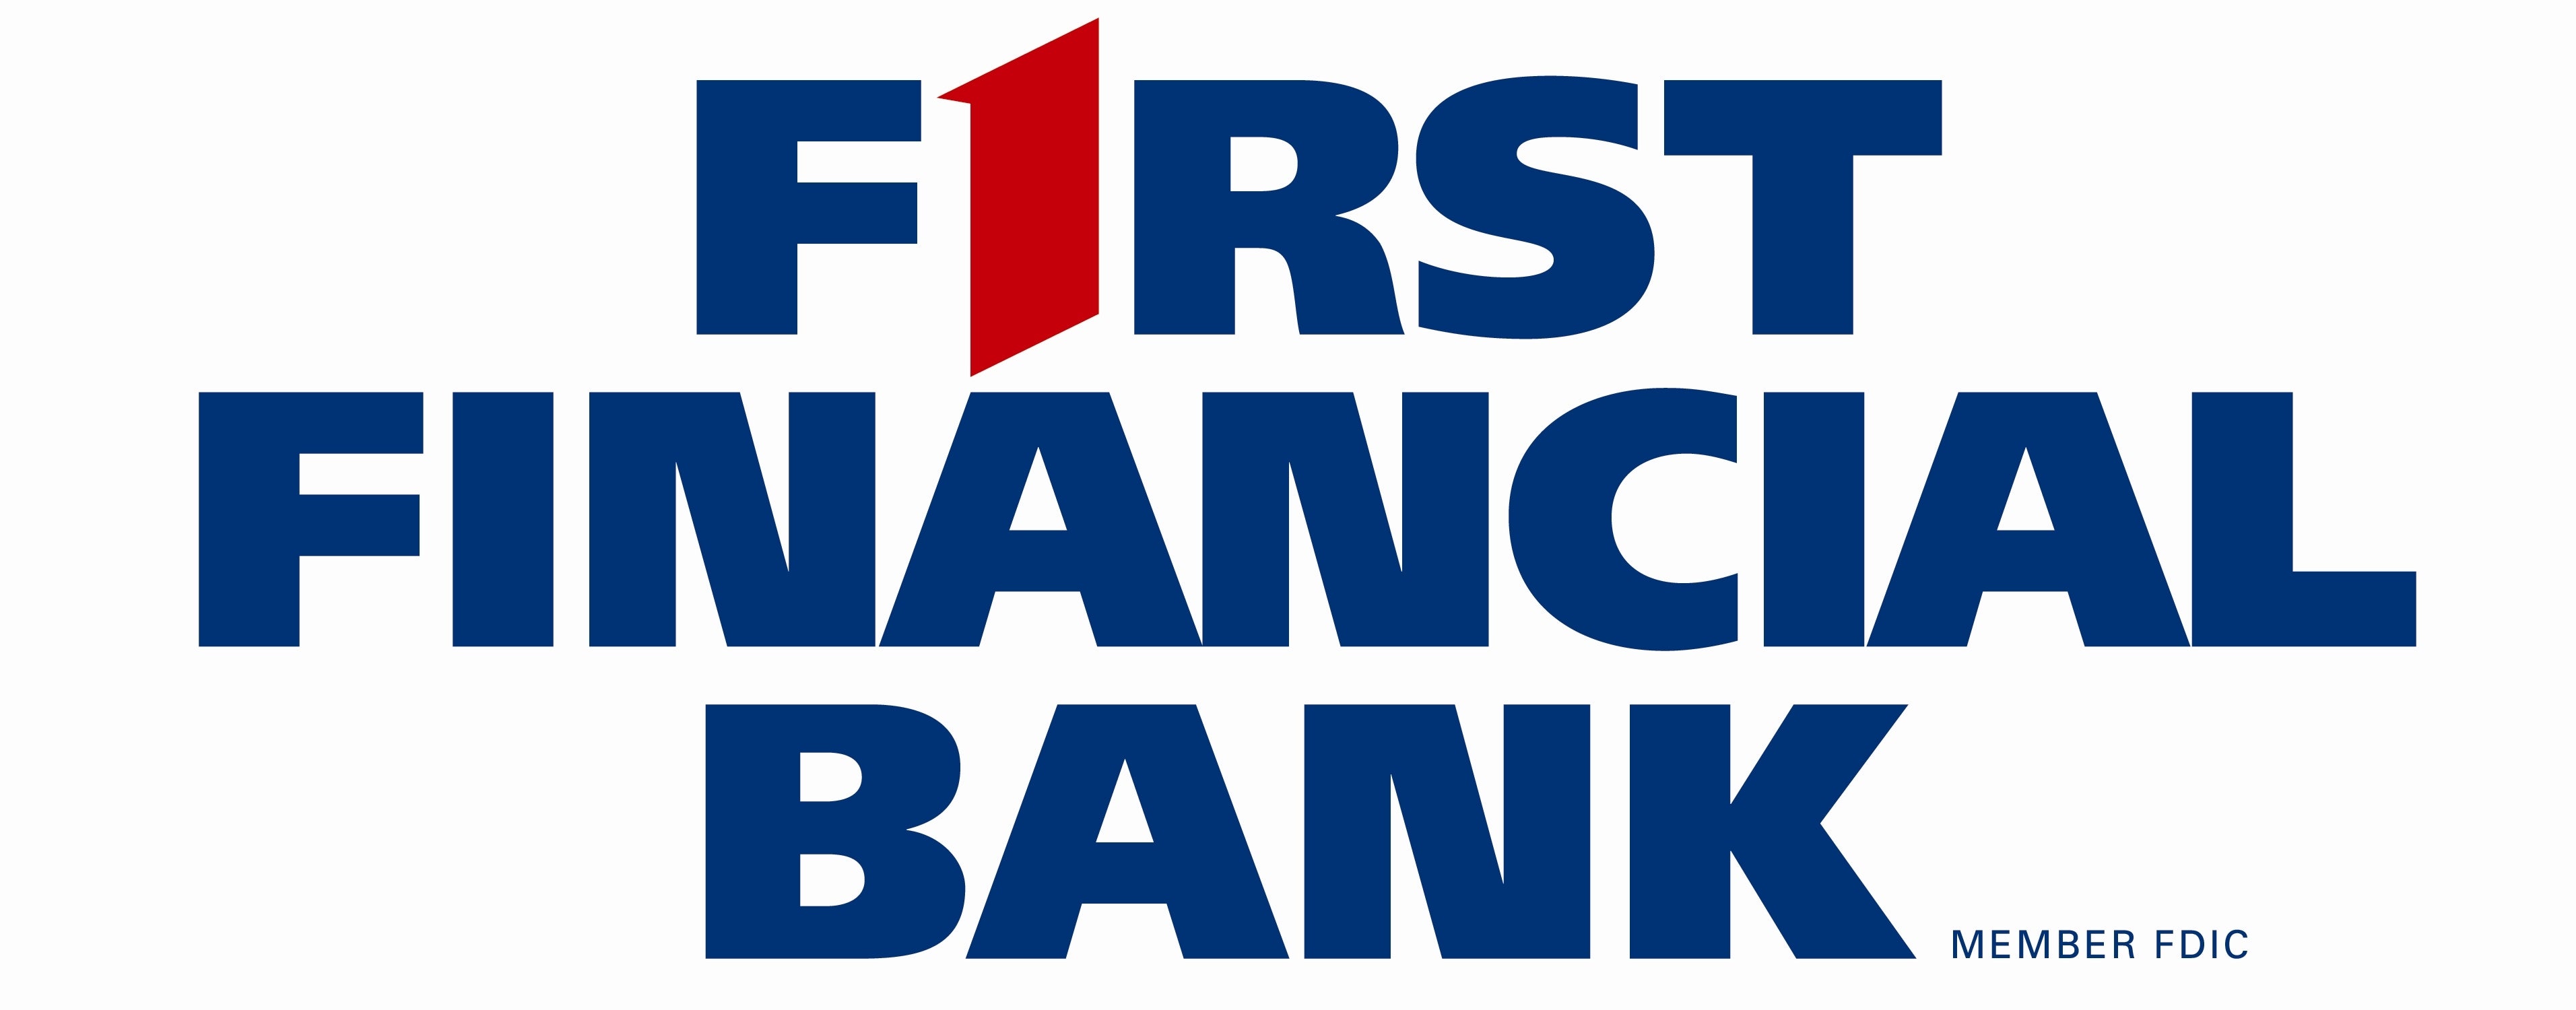 First financial bank job openings